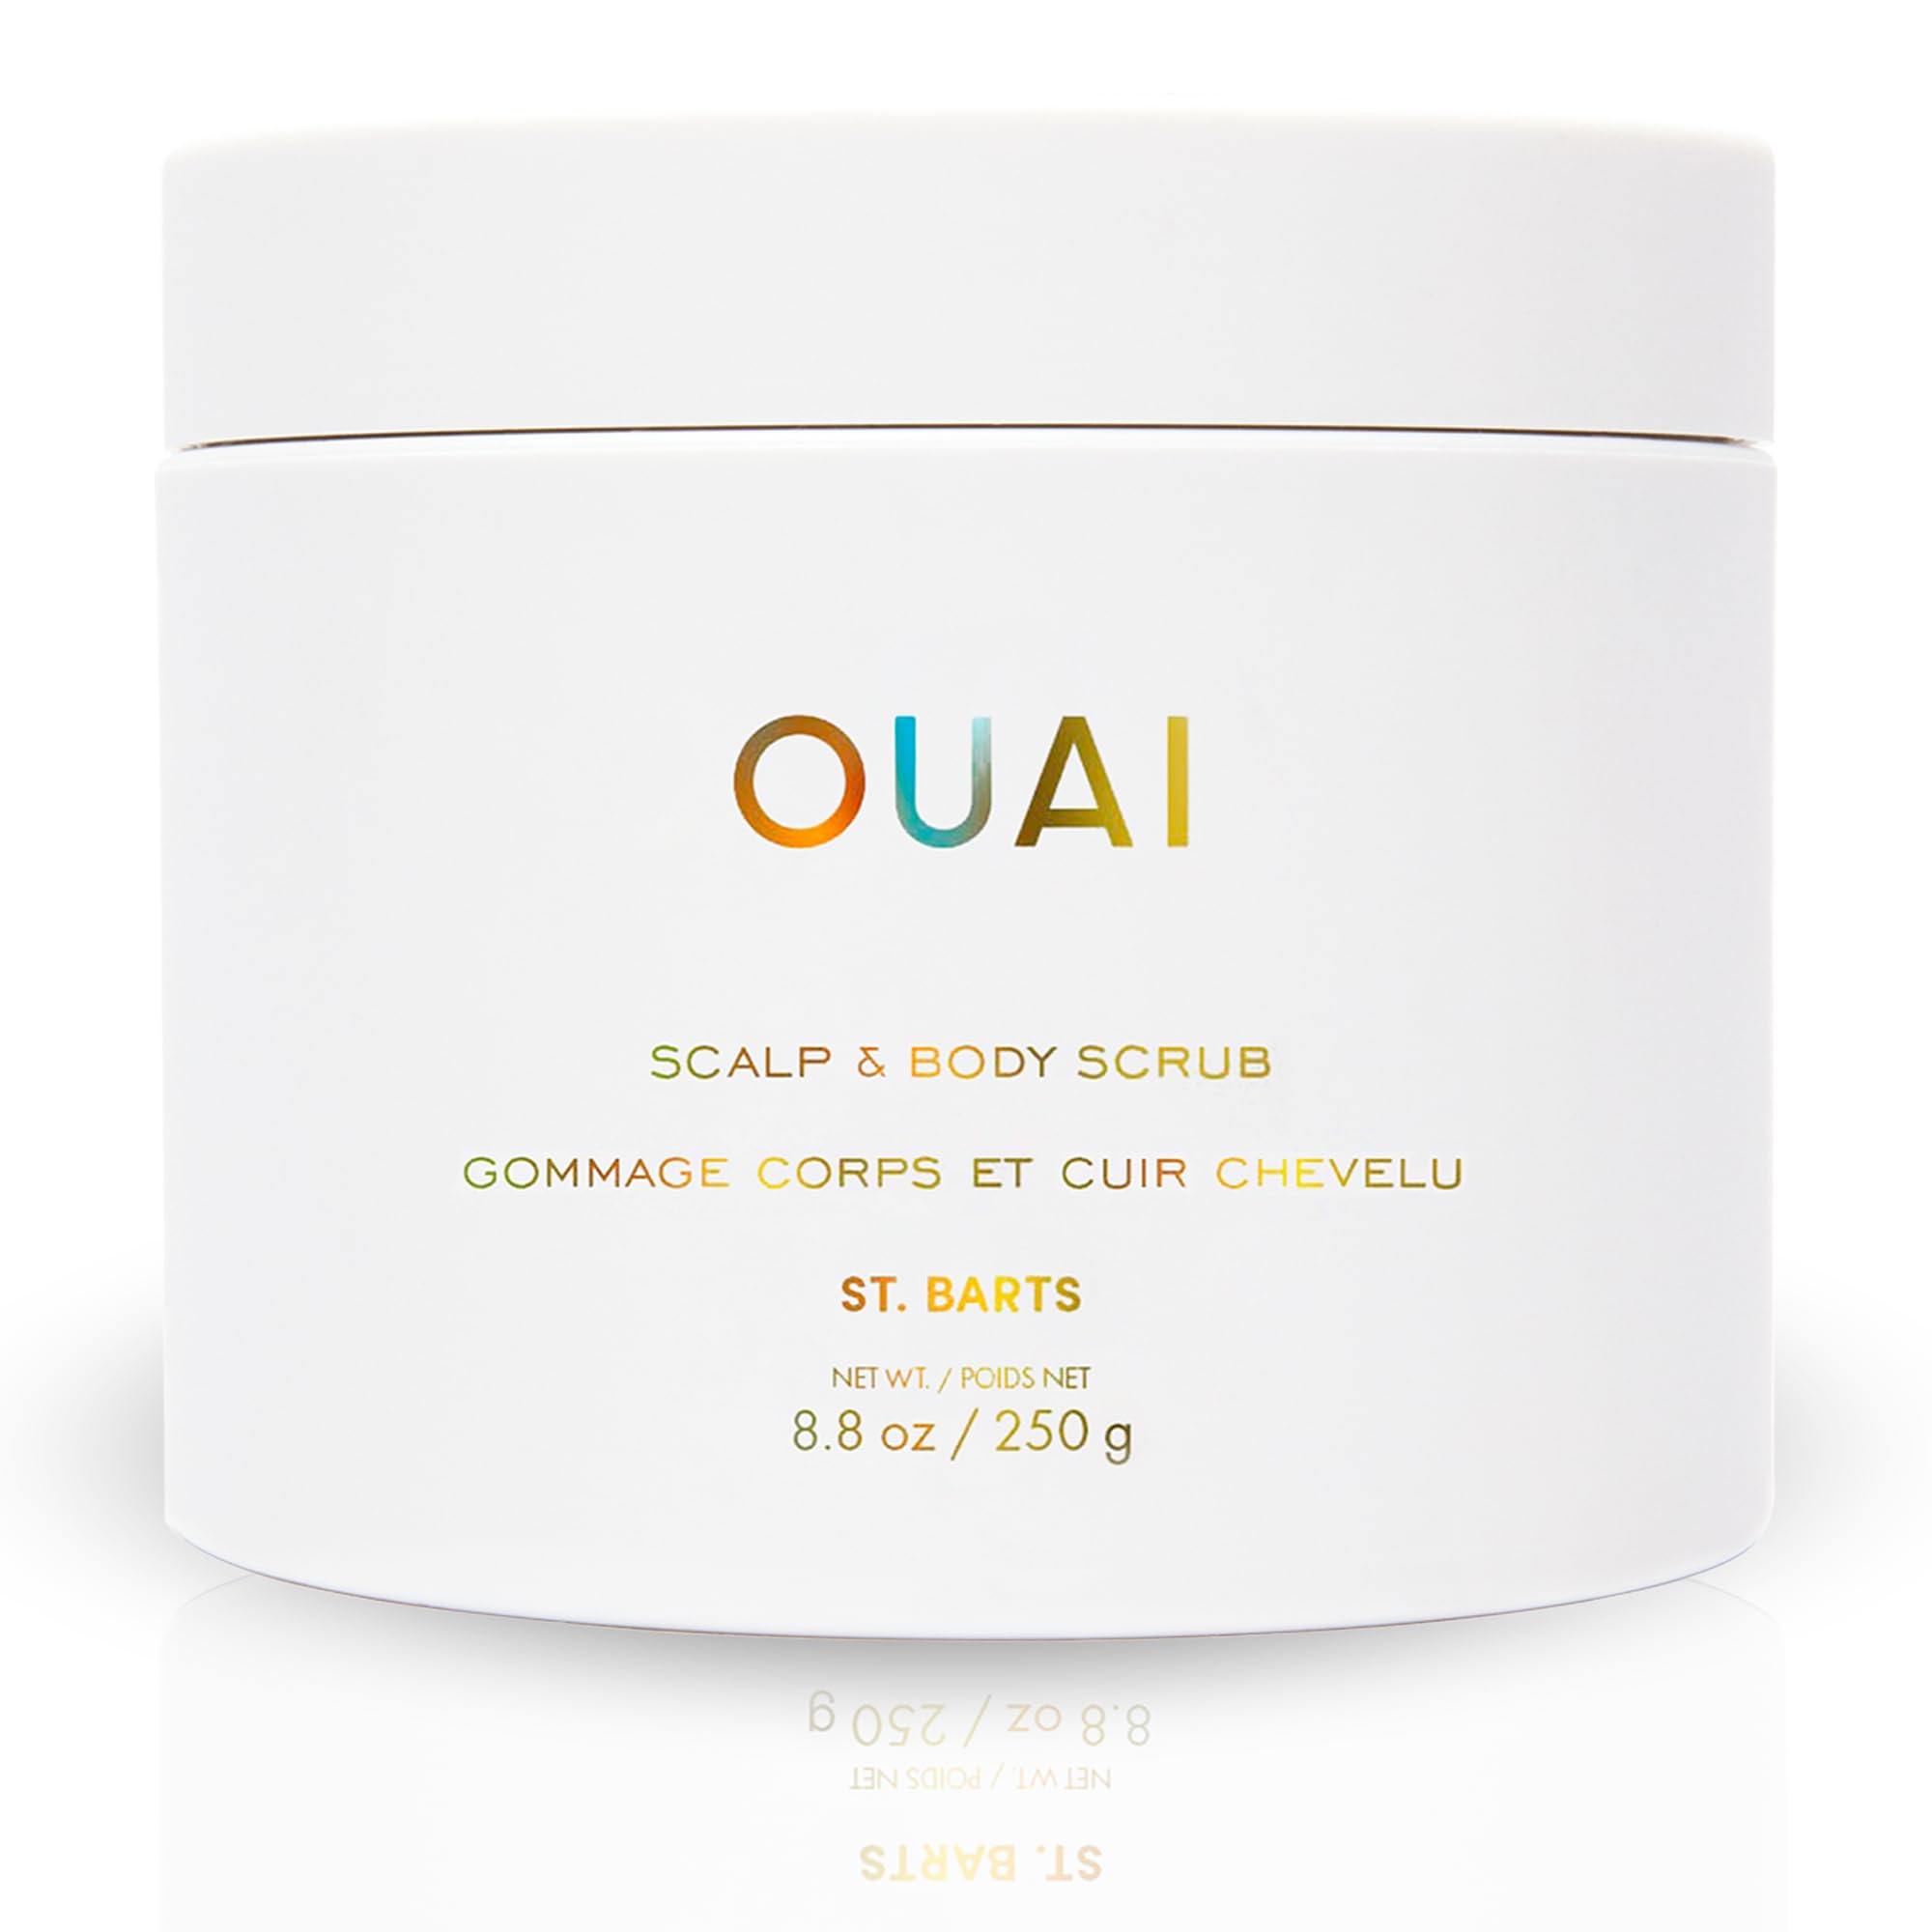 OUAI Scalp and Body Scrub, St. Barts - Deep-Cleansing Sugar Scrub for Hair and Skin - Exfoliates & Moisturizes - 8.8 oz